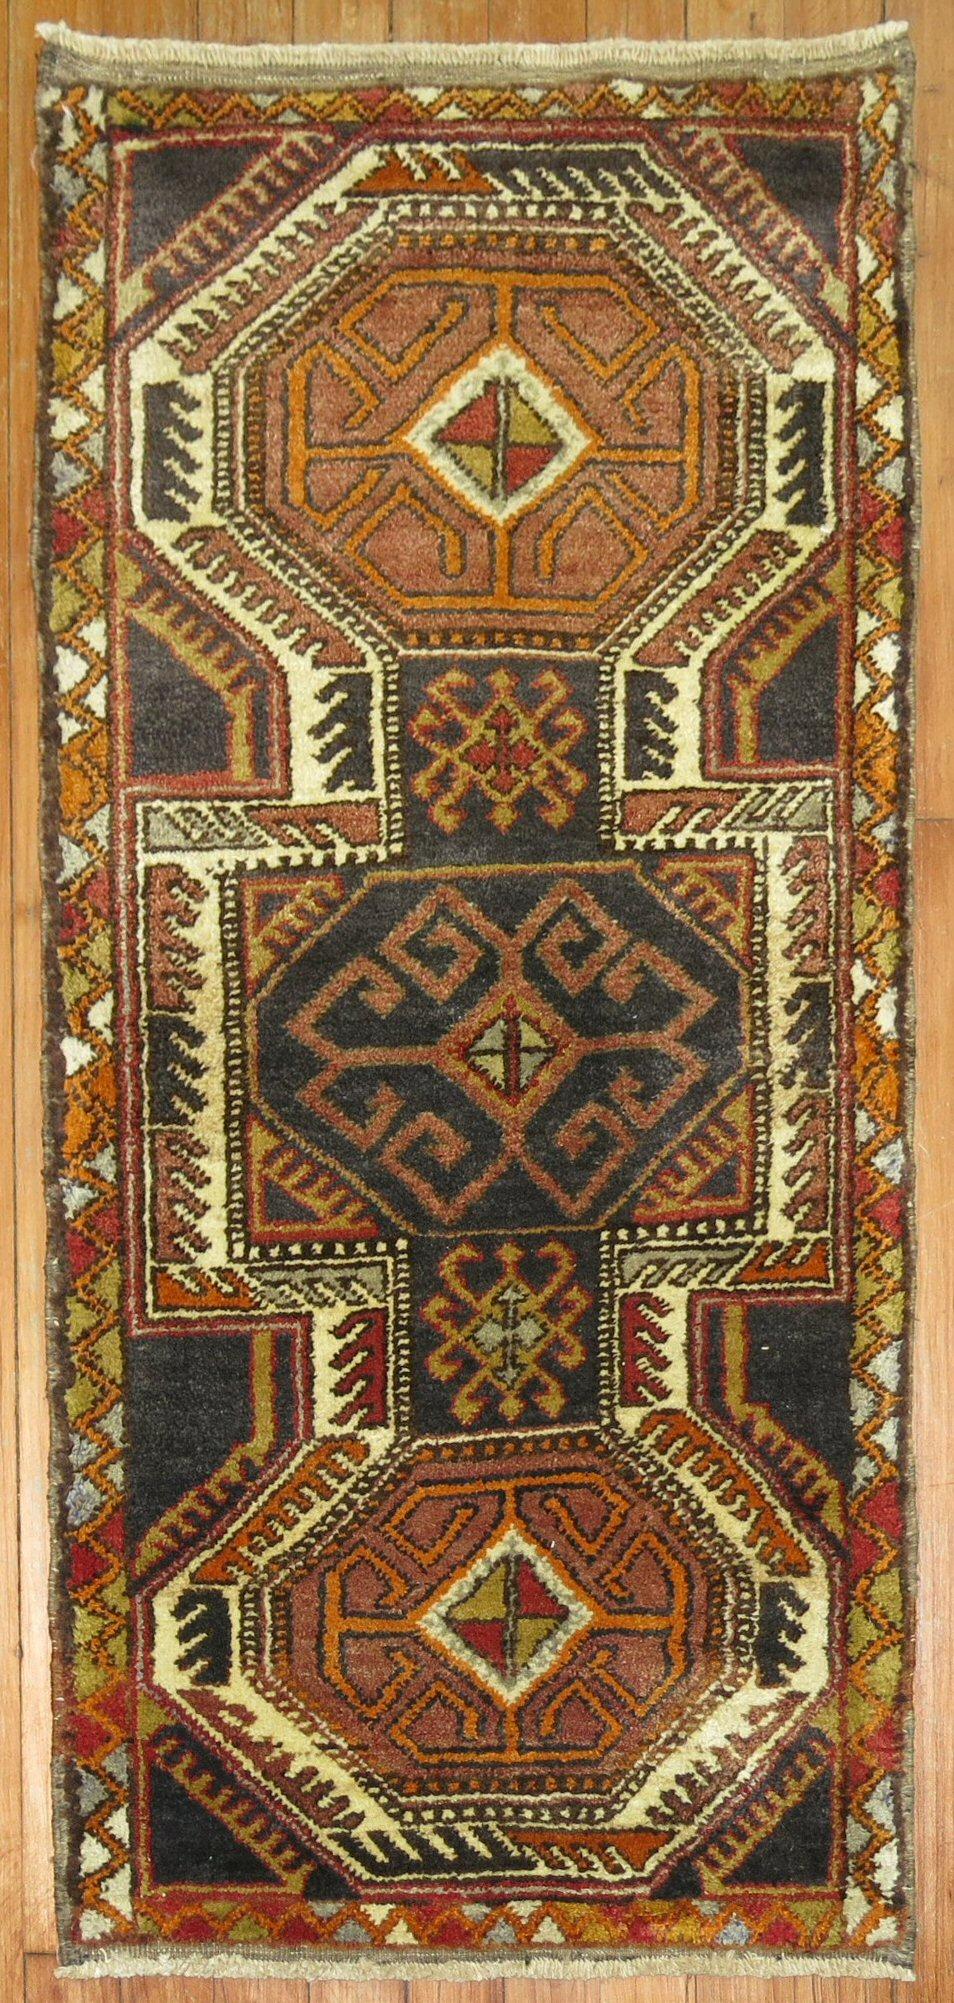 Mid-20th century Tribal Turkish rug in brown

Measures: 1'9'' x 3'8